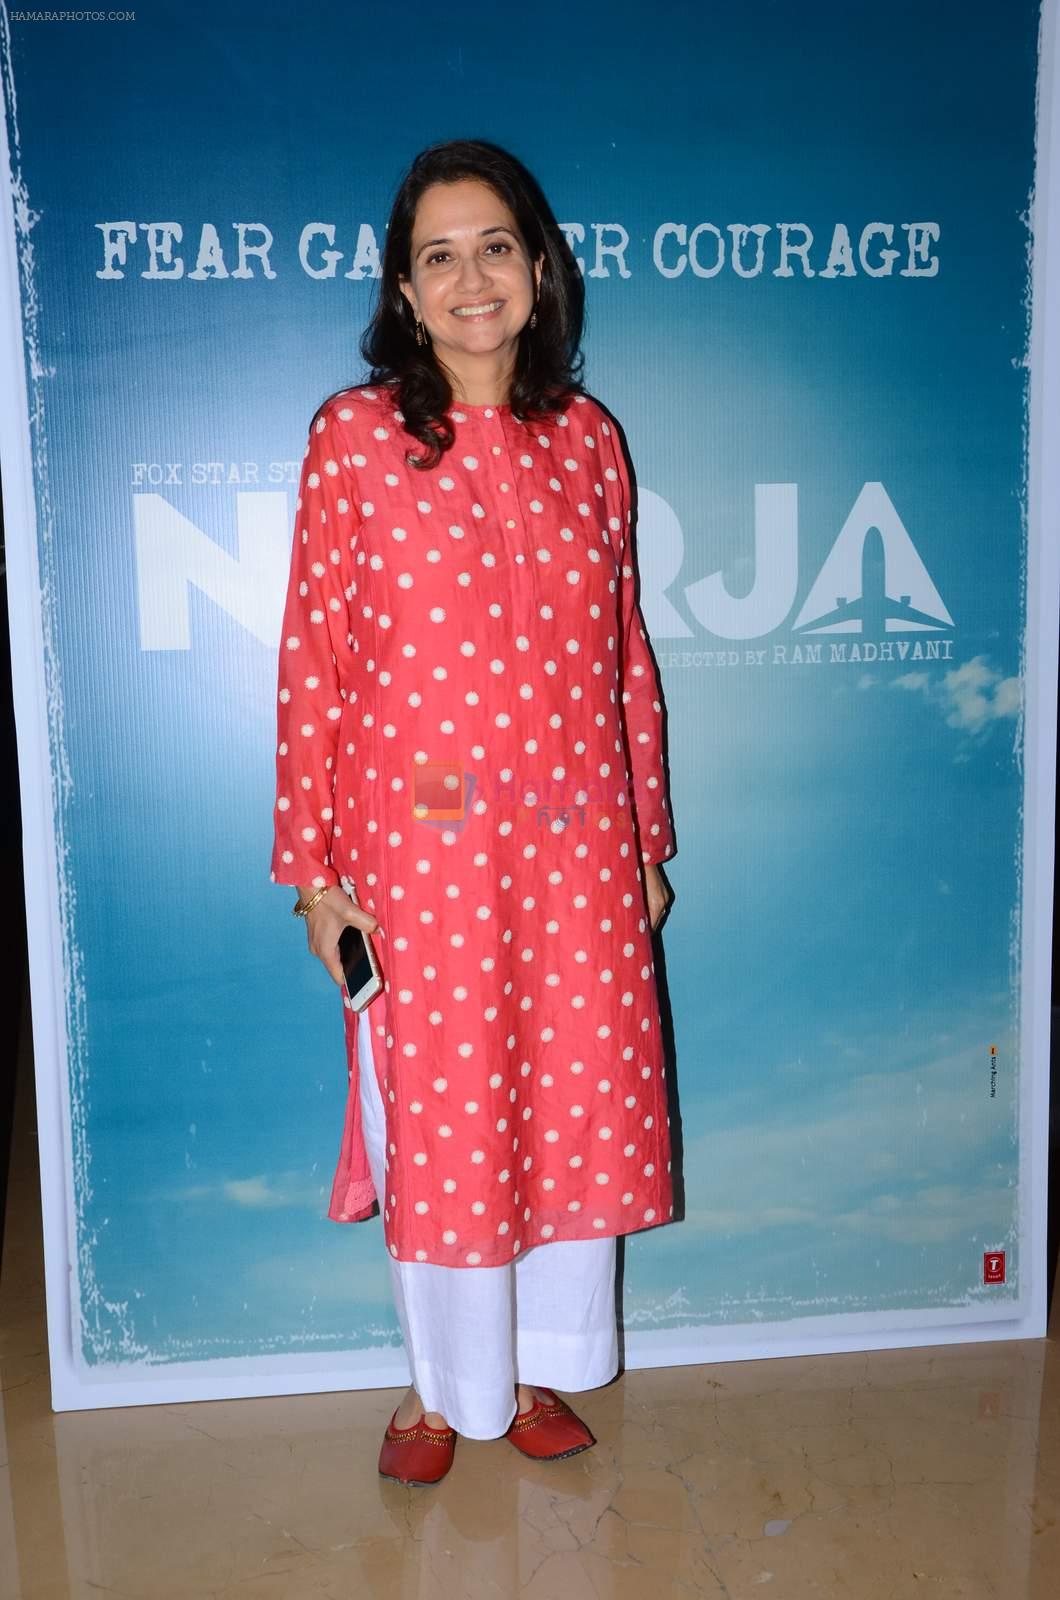 at Neerja film launch in Mumbai on 17th Dec 2015